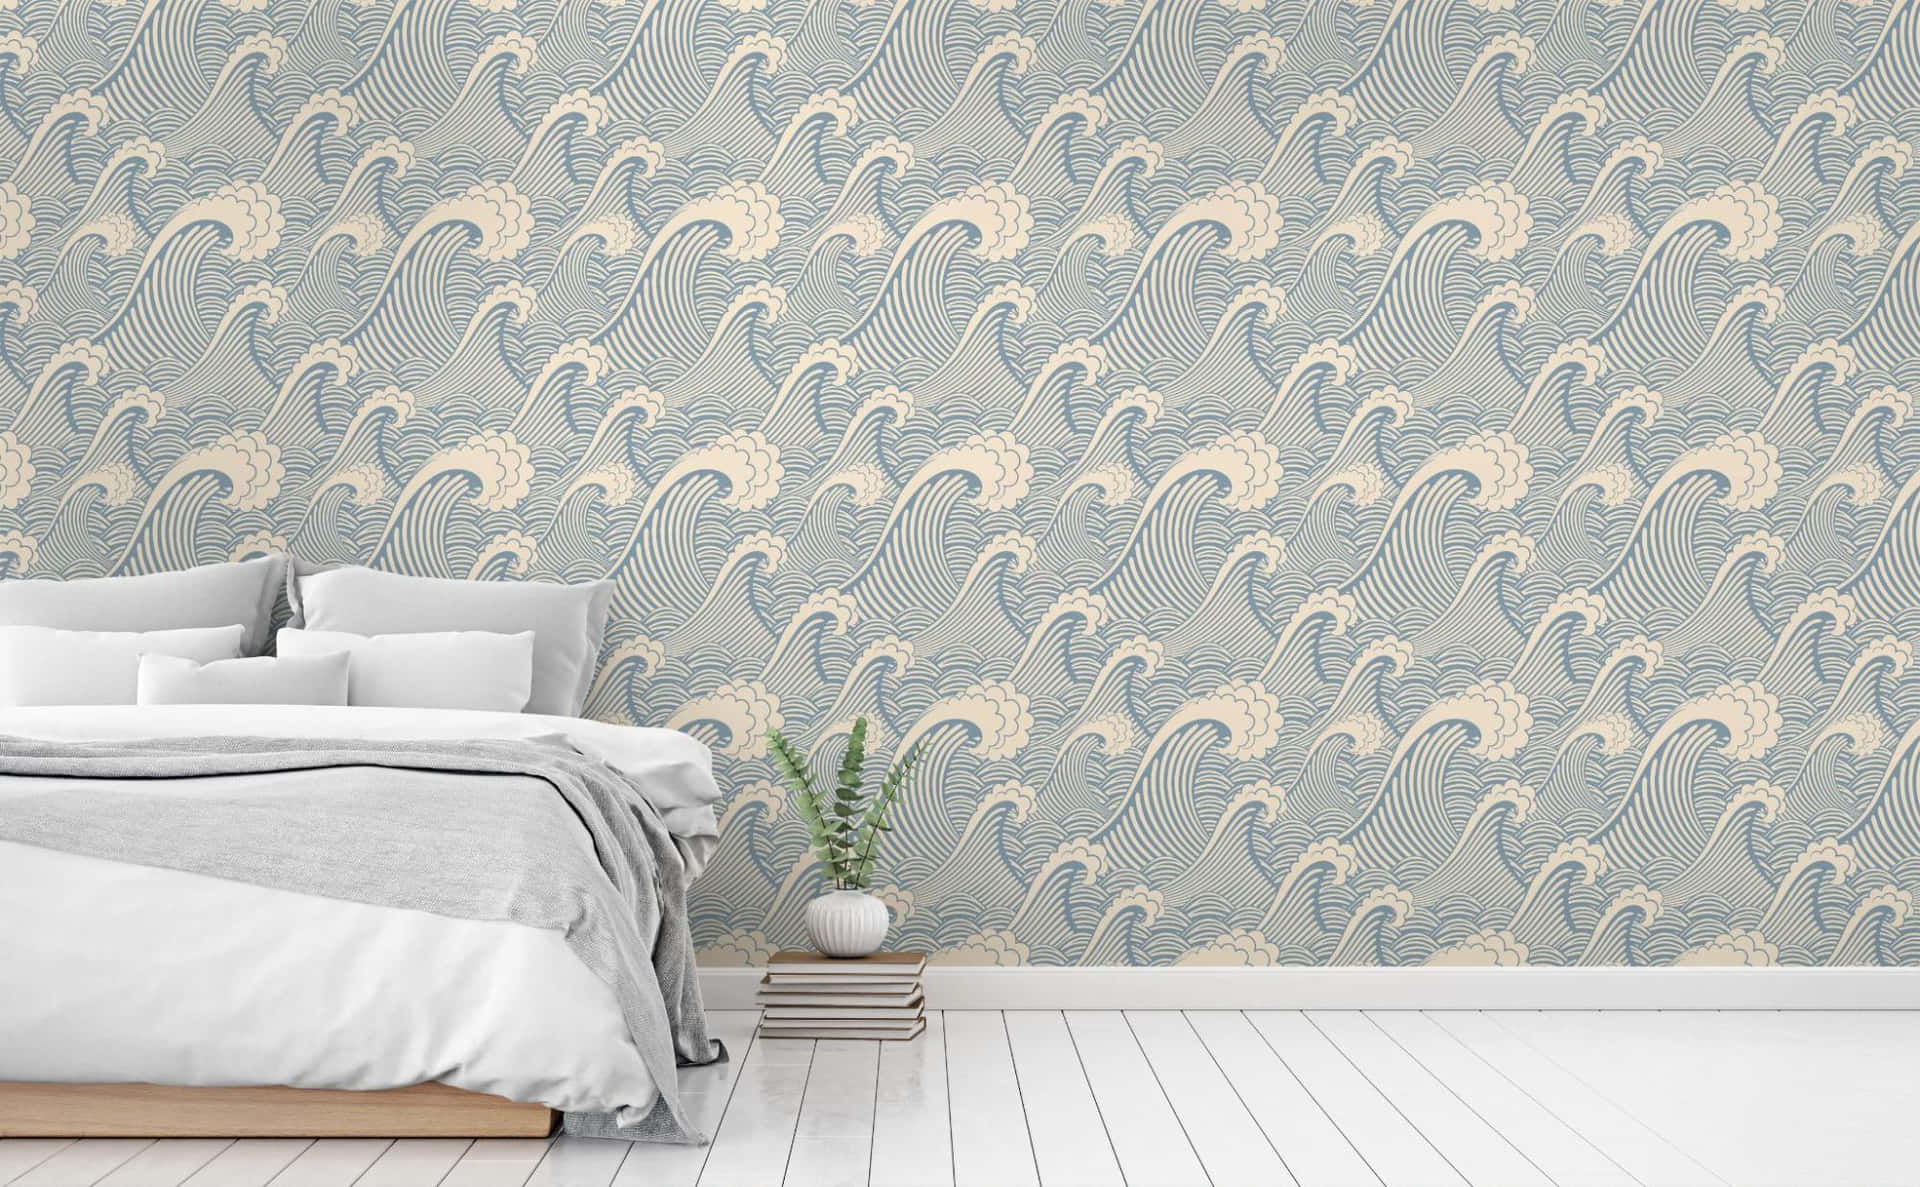 Bedroom With Chic Wallpaper Wallpaper